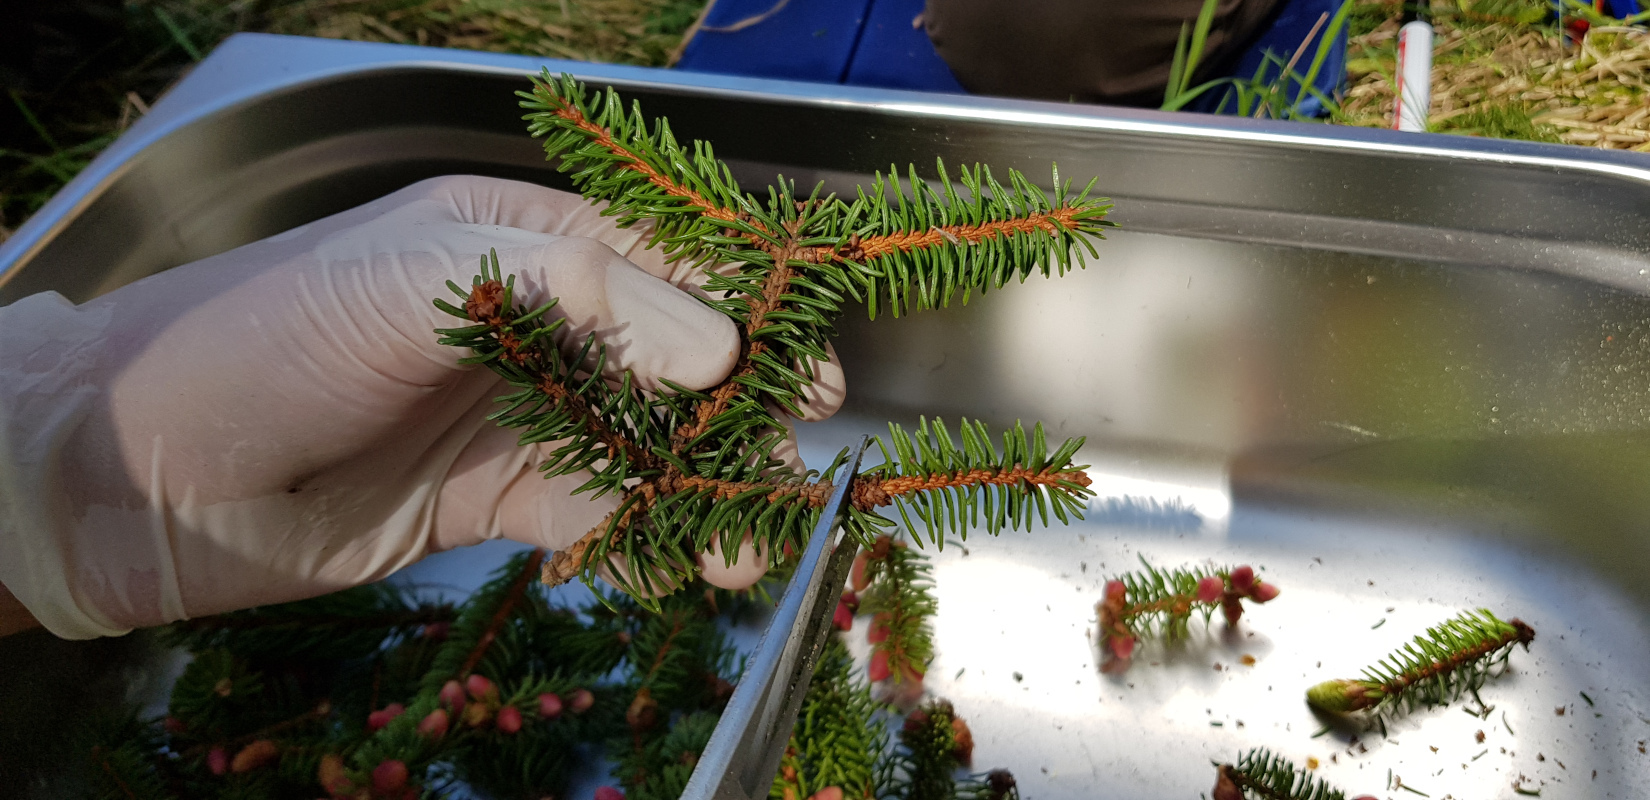 Common spruce shoot